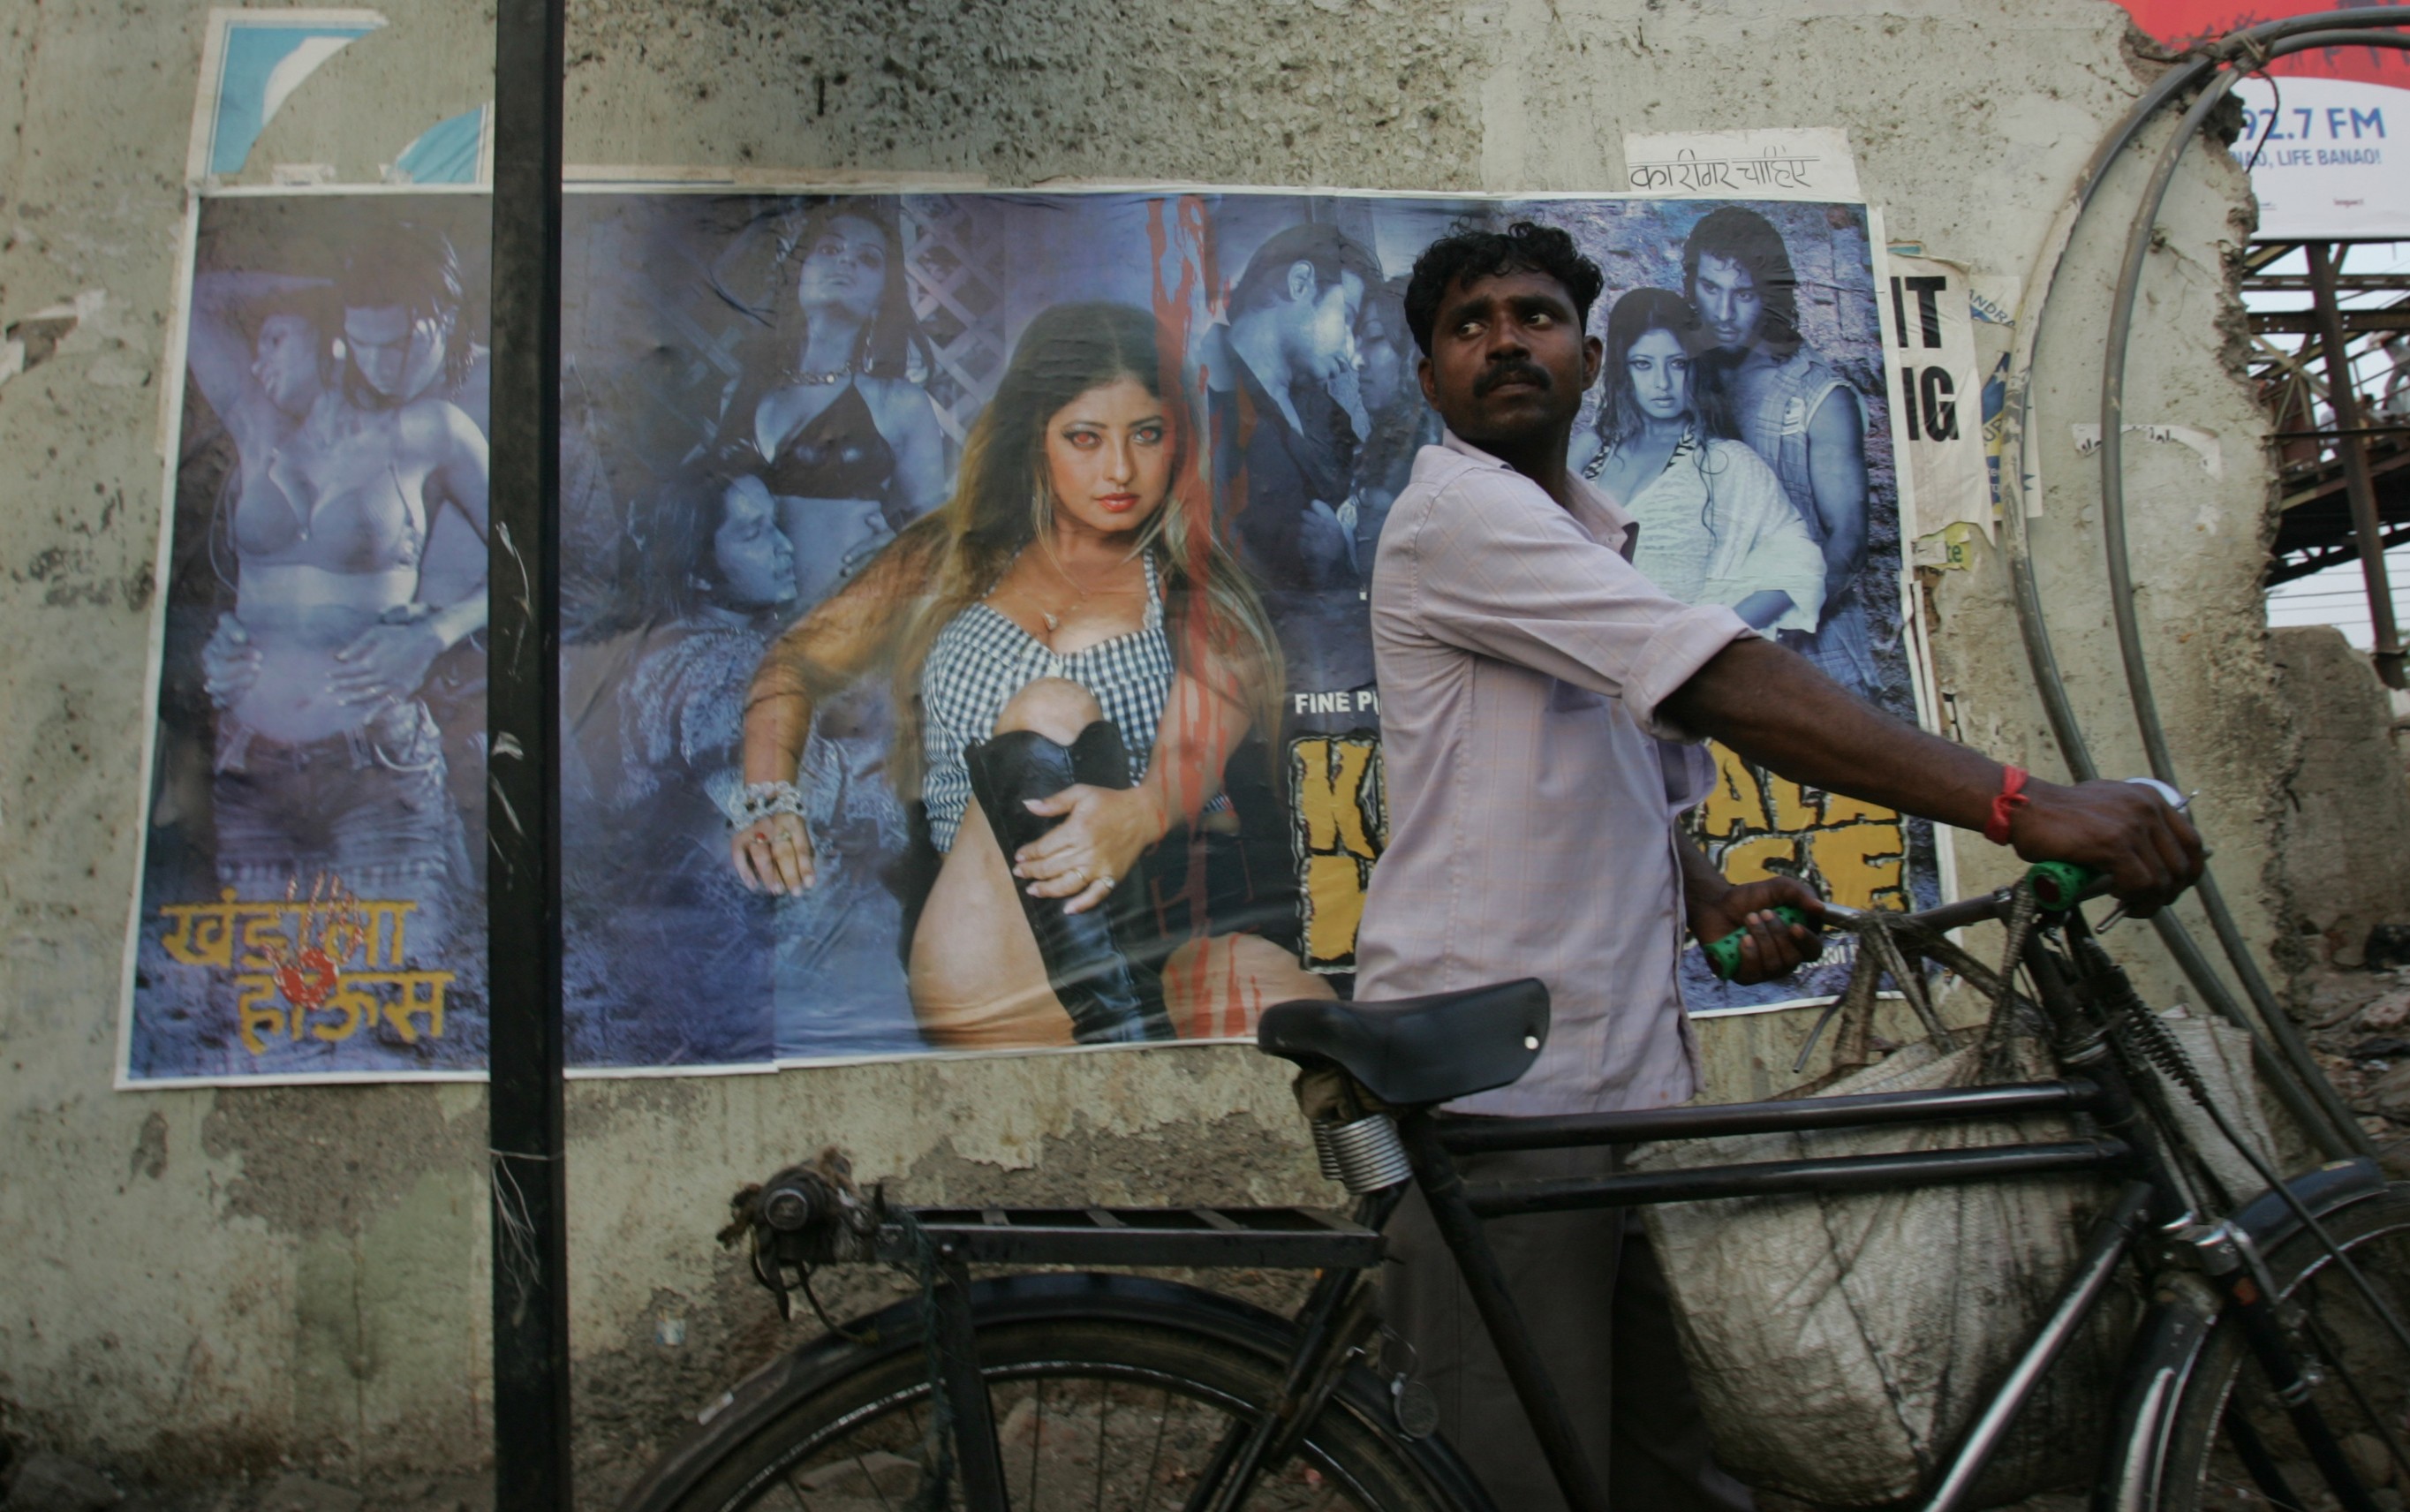 Sapna Ke Xxx - Meet the Leading Lady of India's Pulp Cinema